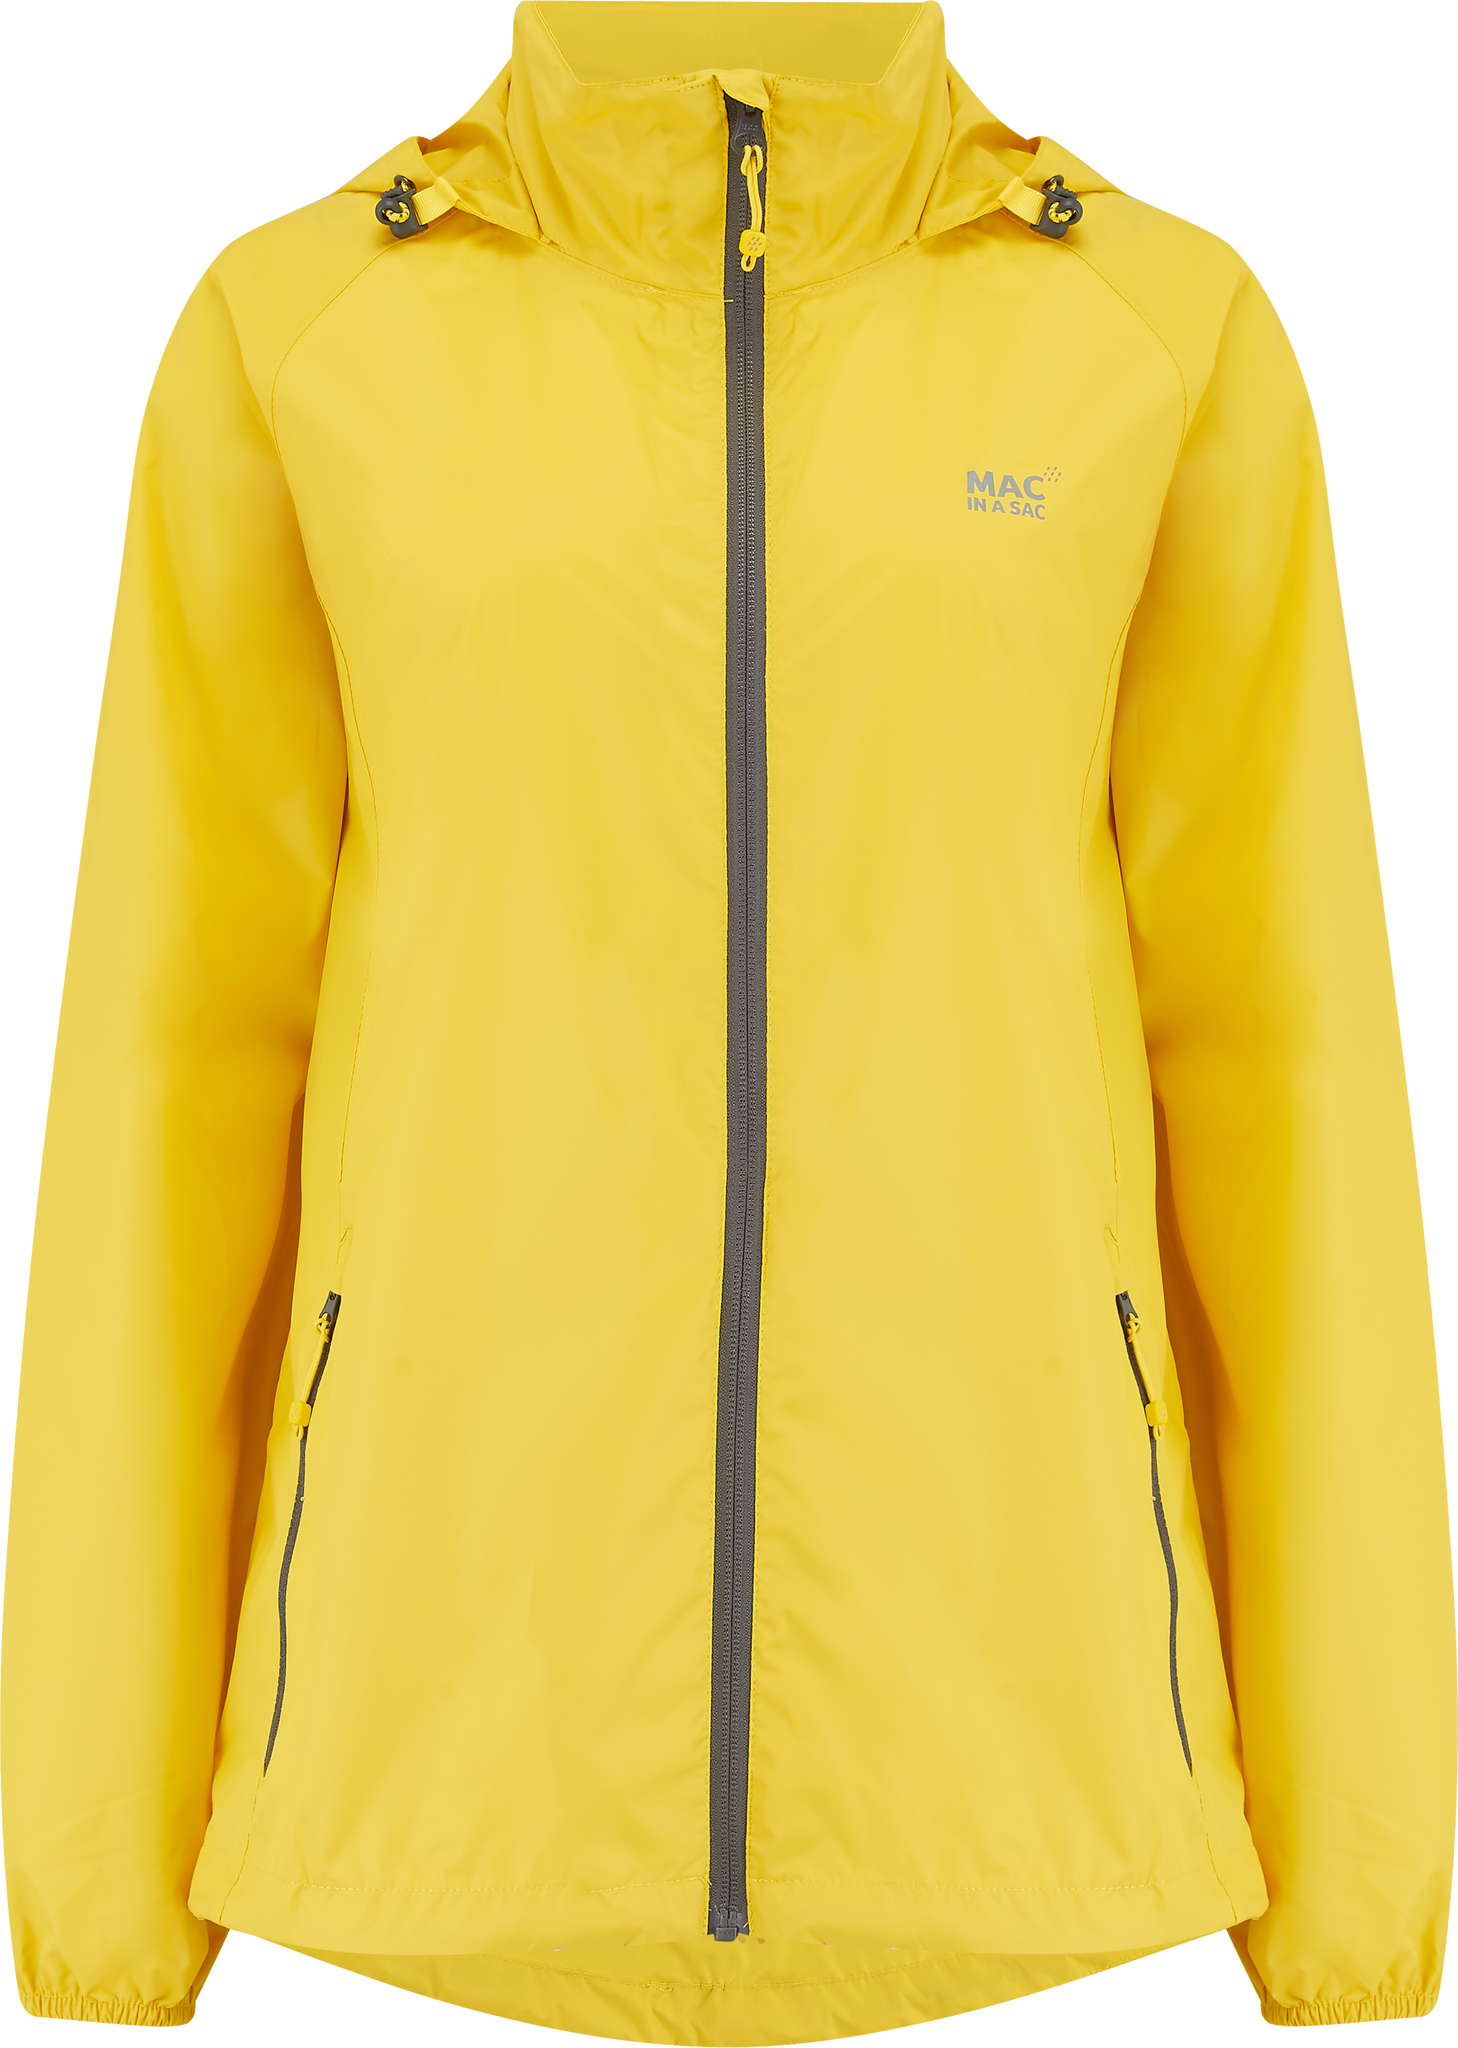 Adults Mac  in A Sac Waterproof Packaway Jacket -Yellow